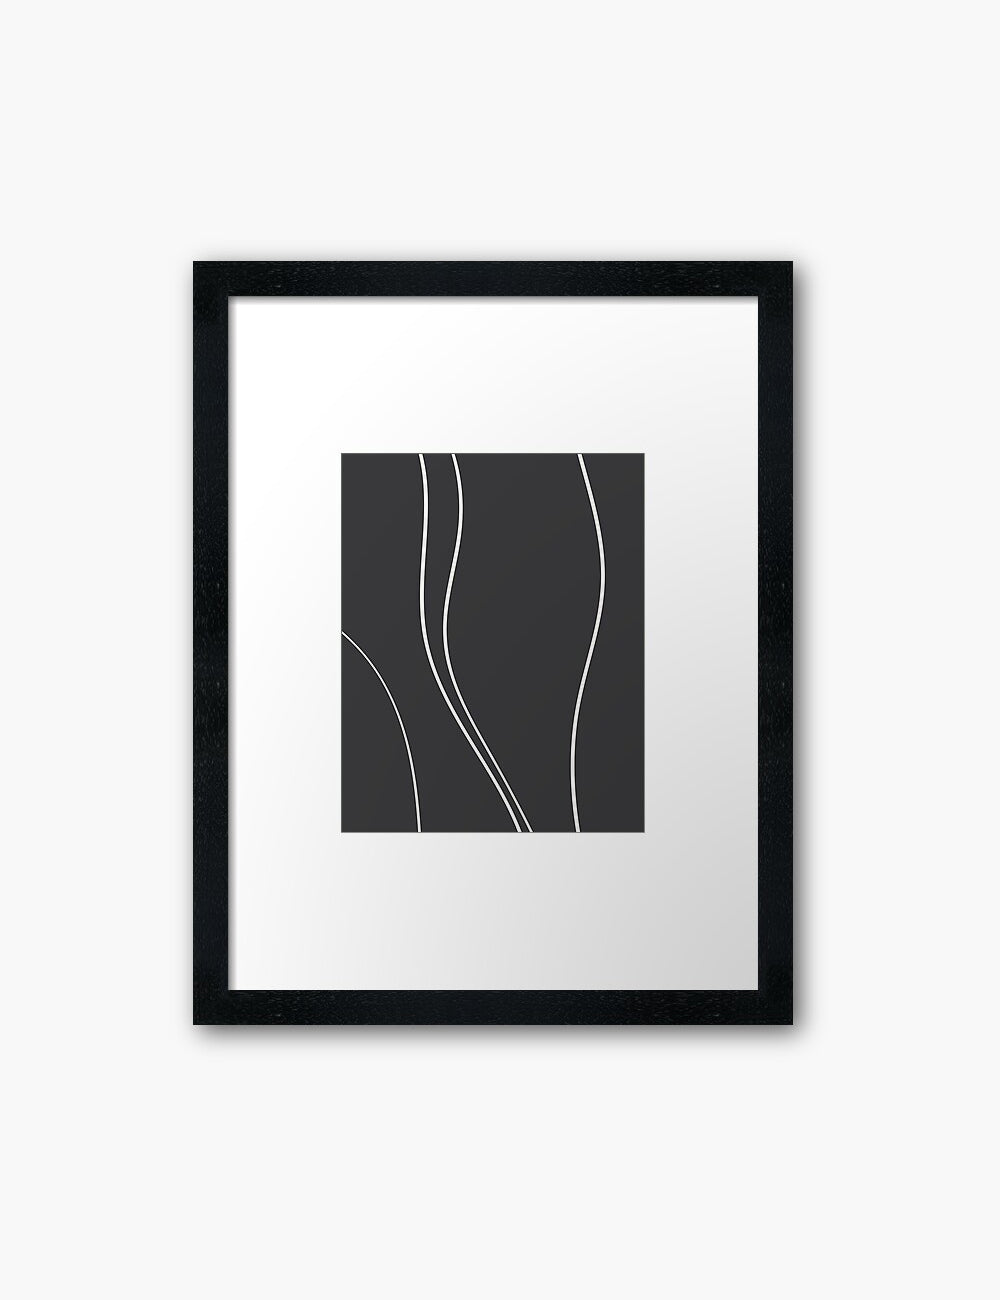 MINIMAL LINE ART. Abstract Waves. Boho. Black and White. Printable Wall Art Illustration. - PAPER MOON Art & Design